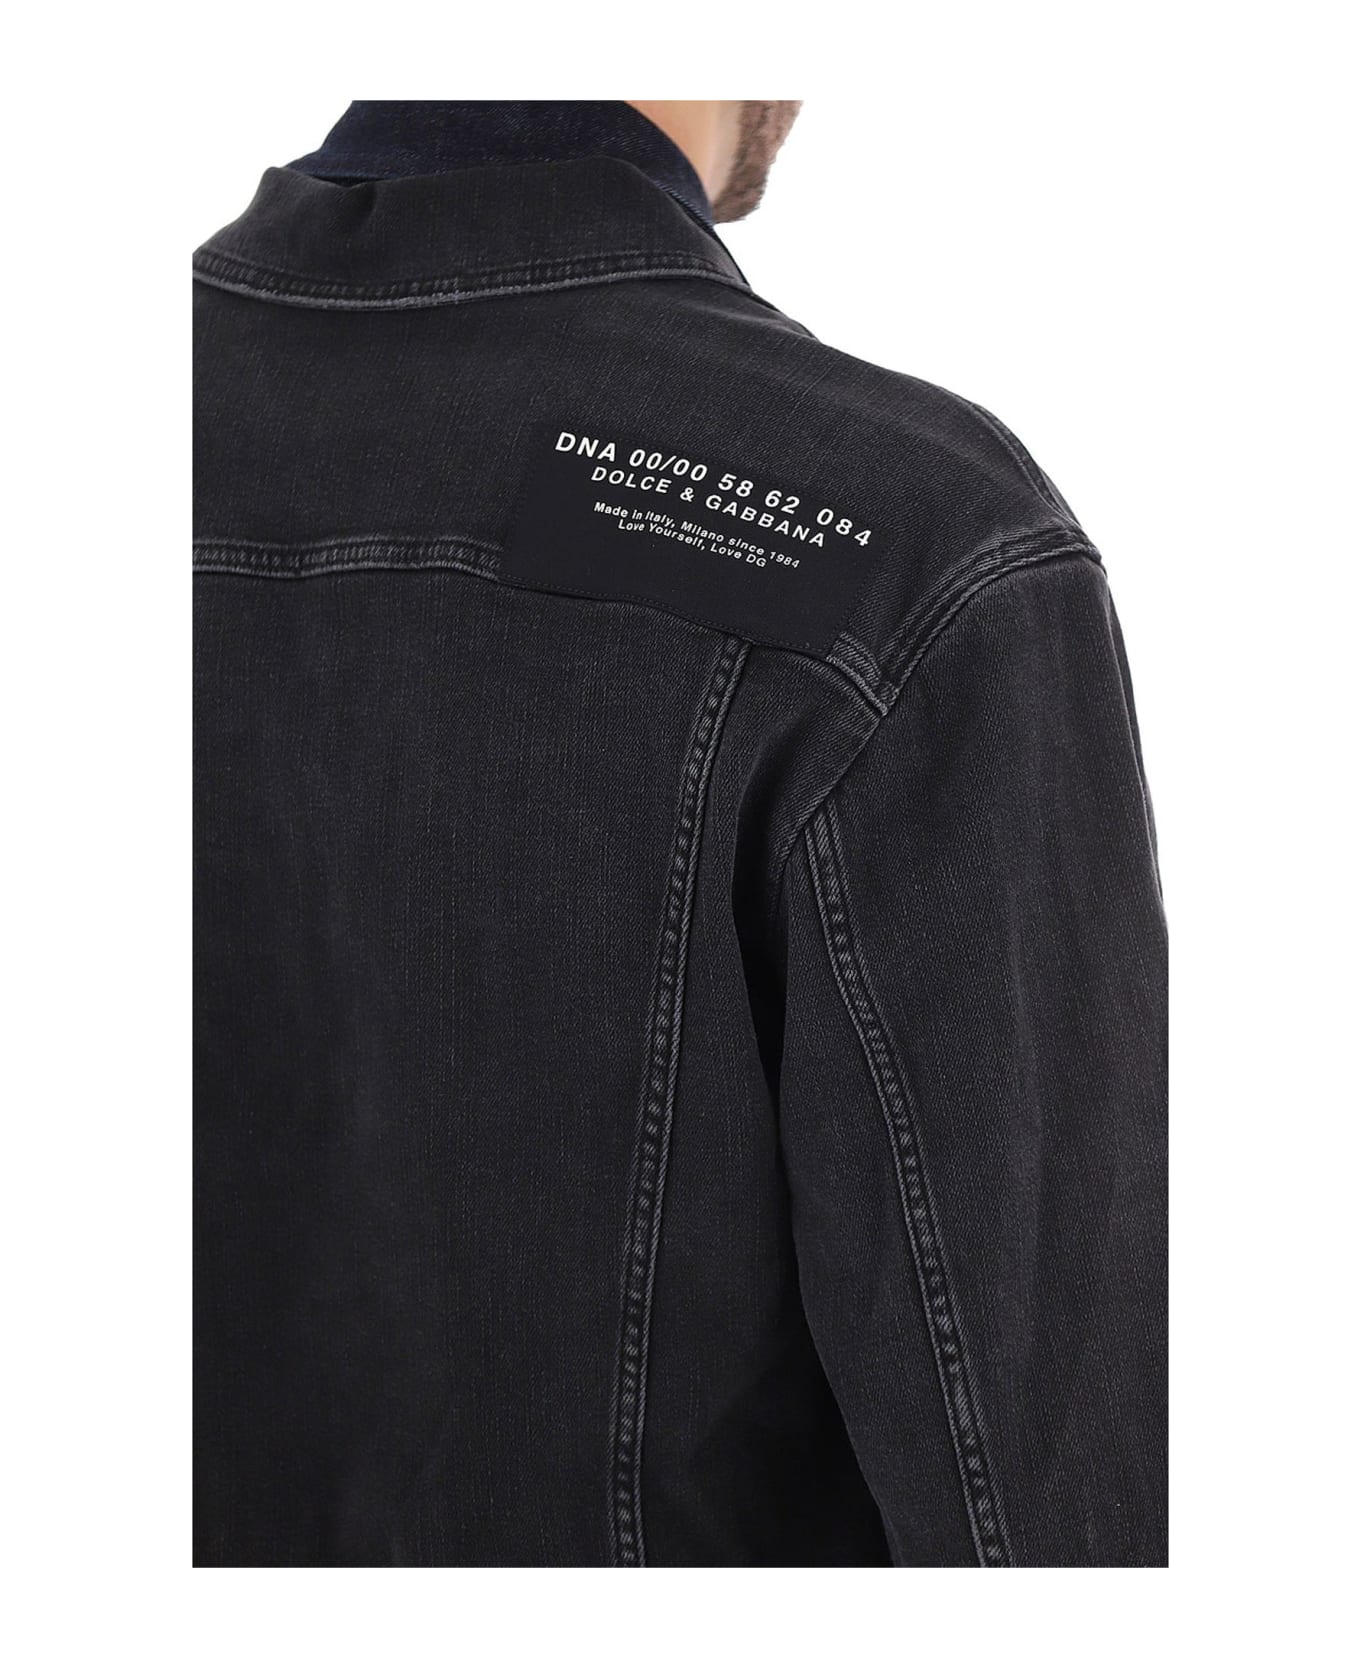 Dolce & Gabbana Denim Jacket - Black ジャケット